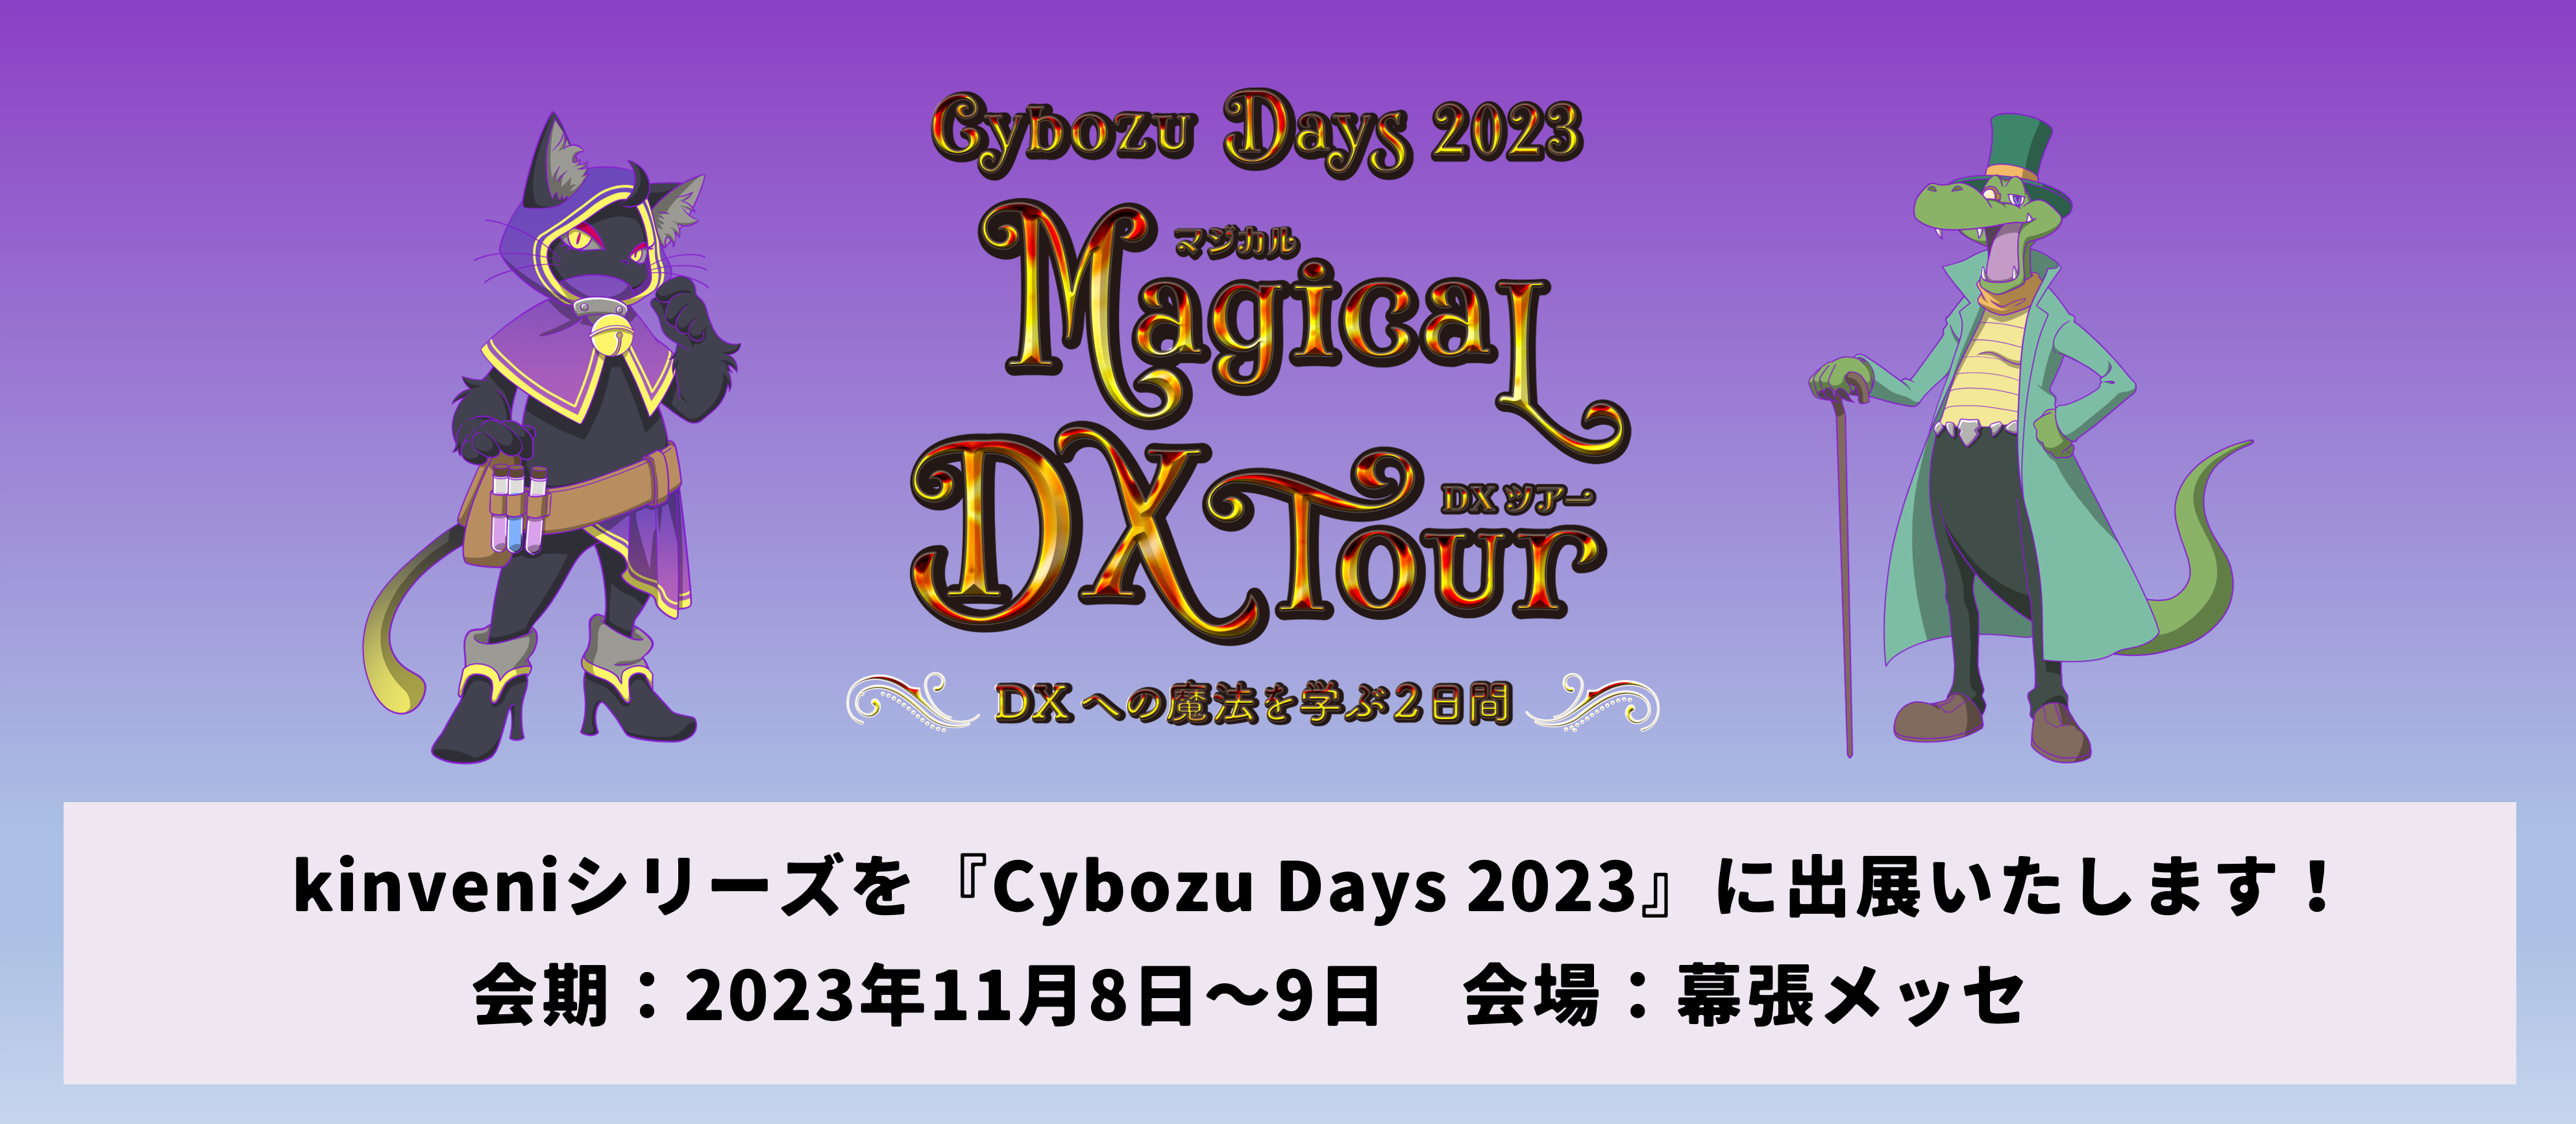 Cybozu Days 2023